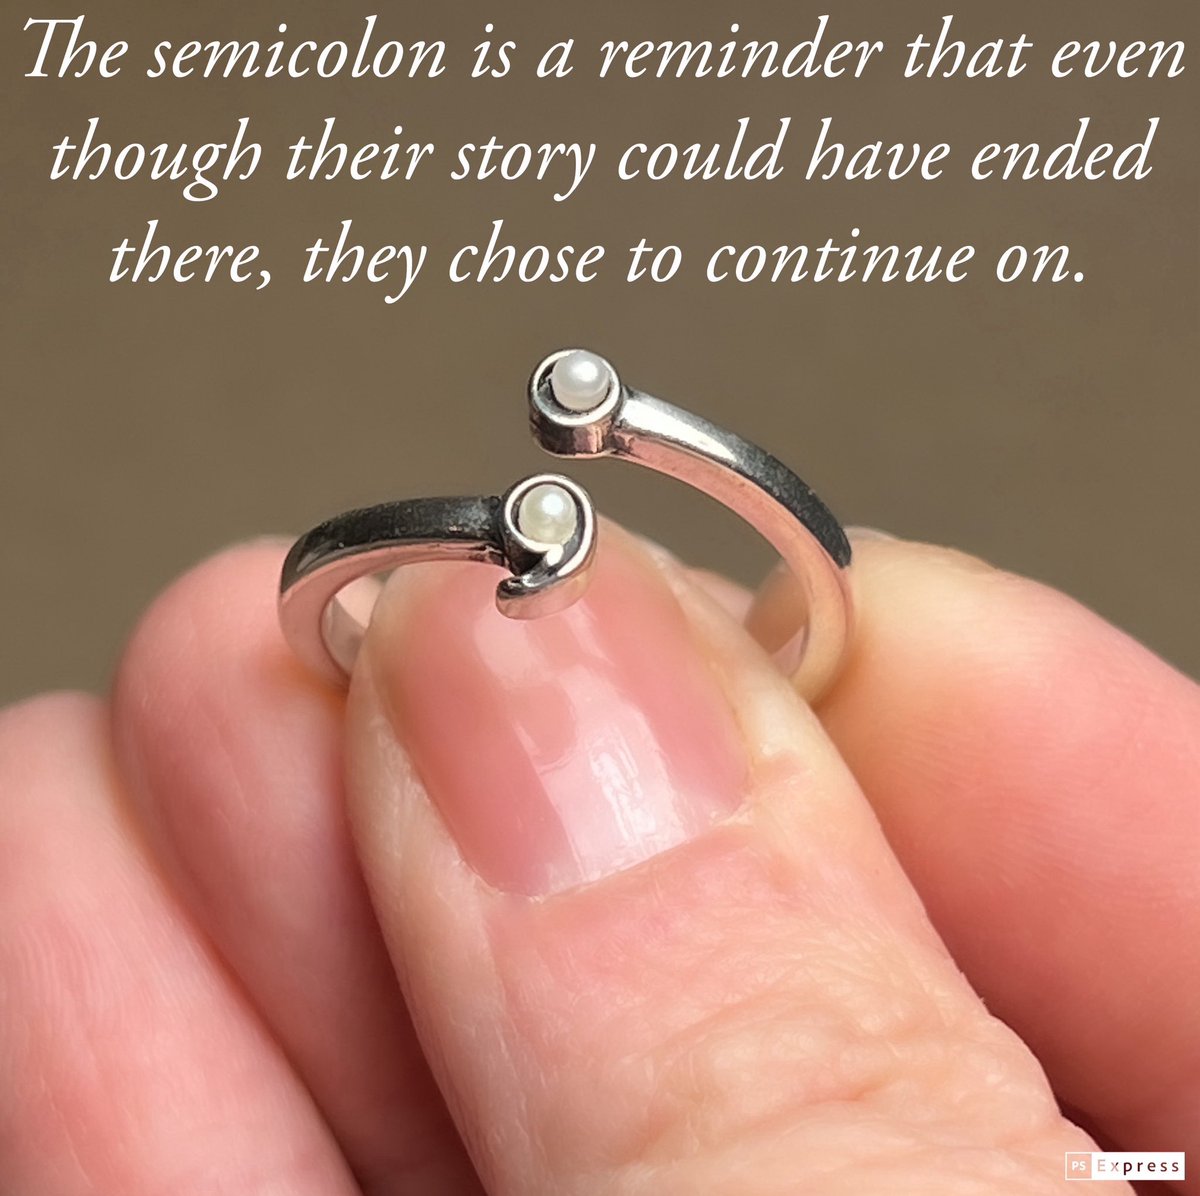 New semicolon rings. 
JFHCs.etsy.com
#MentalHealthAwareness #semicolonsymbol #livingwithdepression